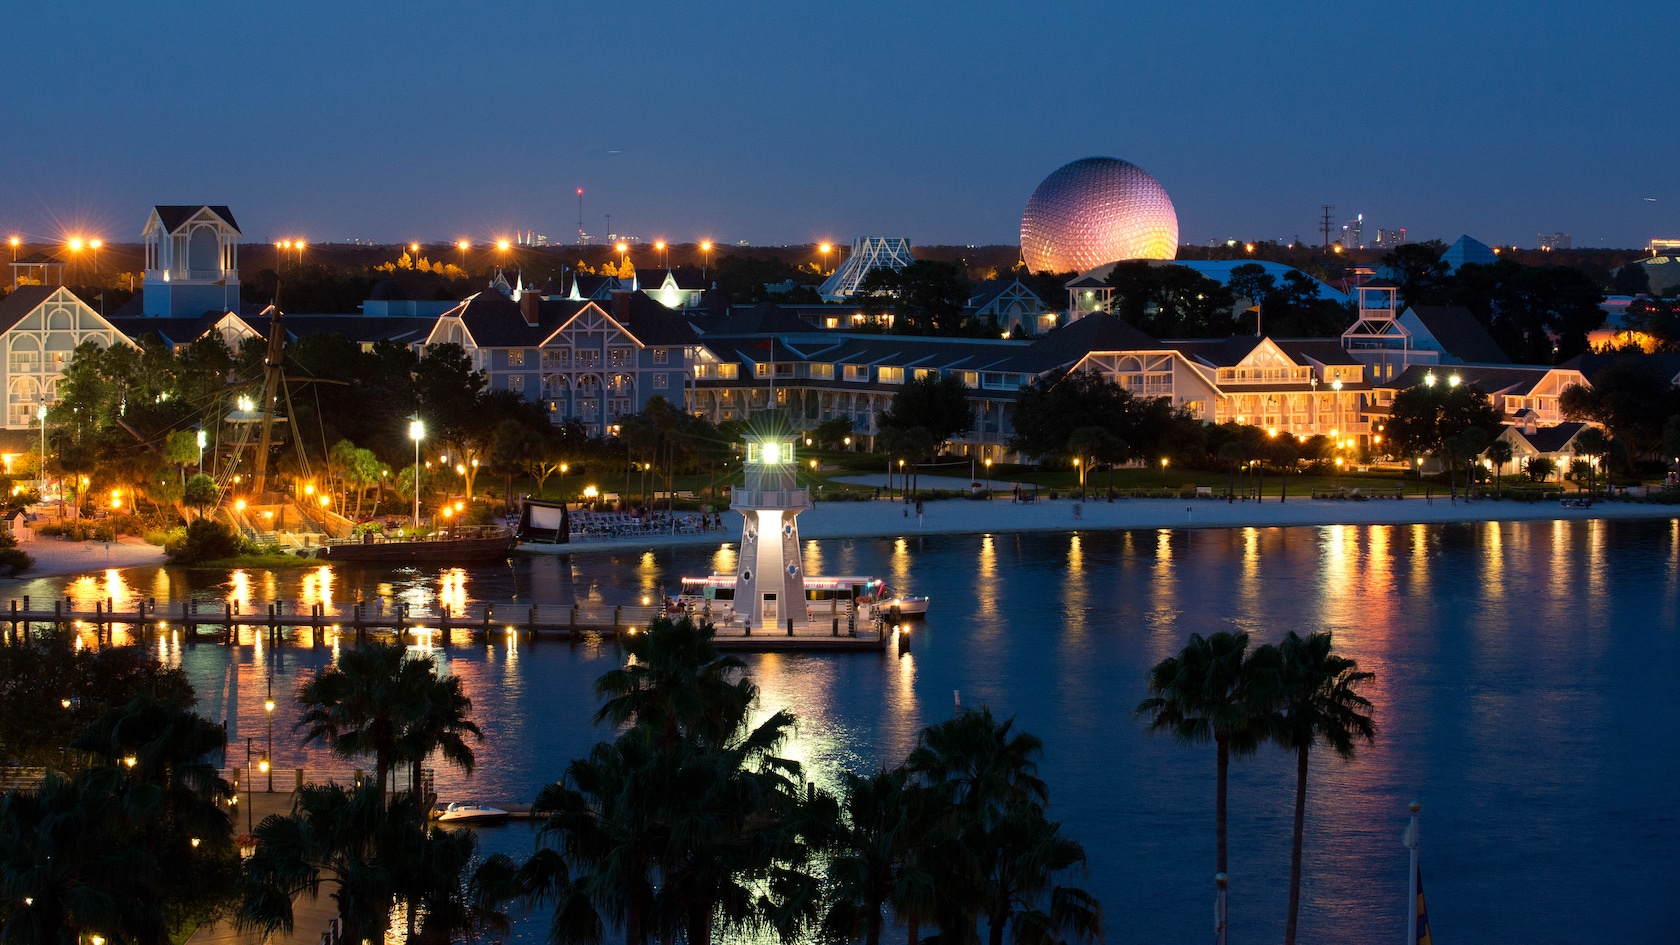 Panoramic view of Disney's Beach Club Resort and Crescent Lake , lit up at night